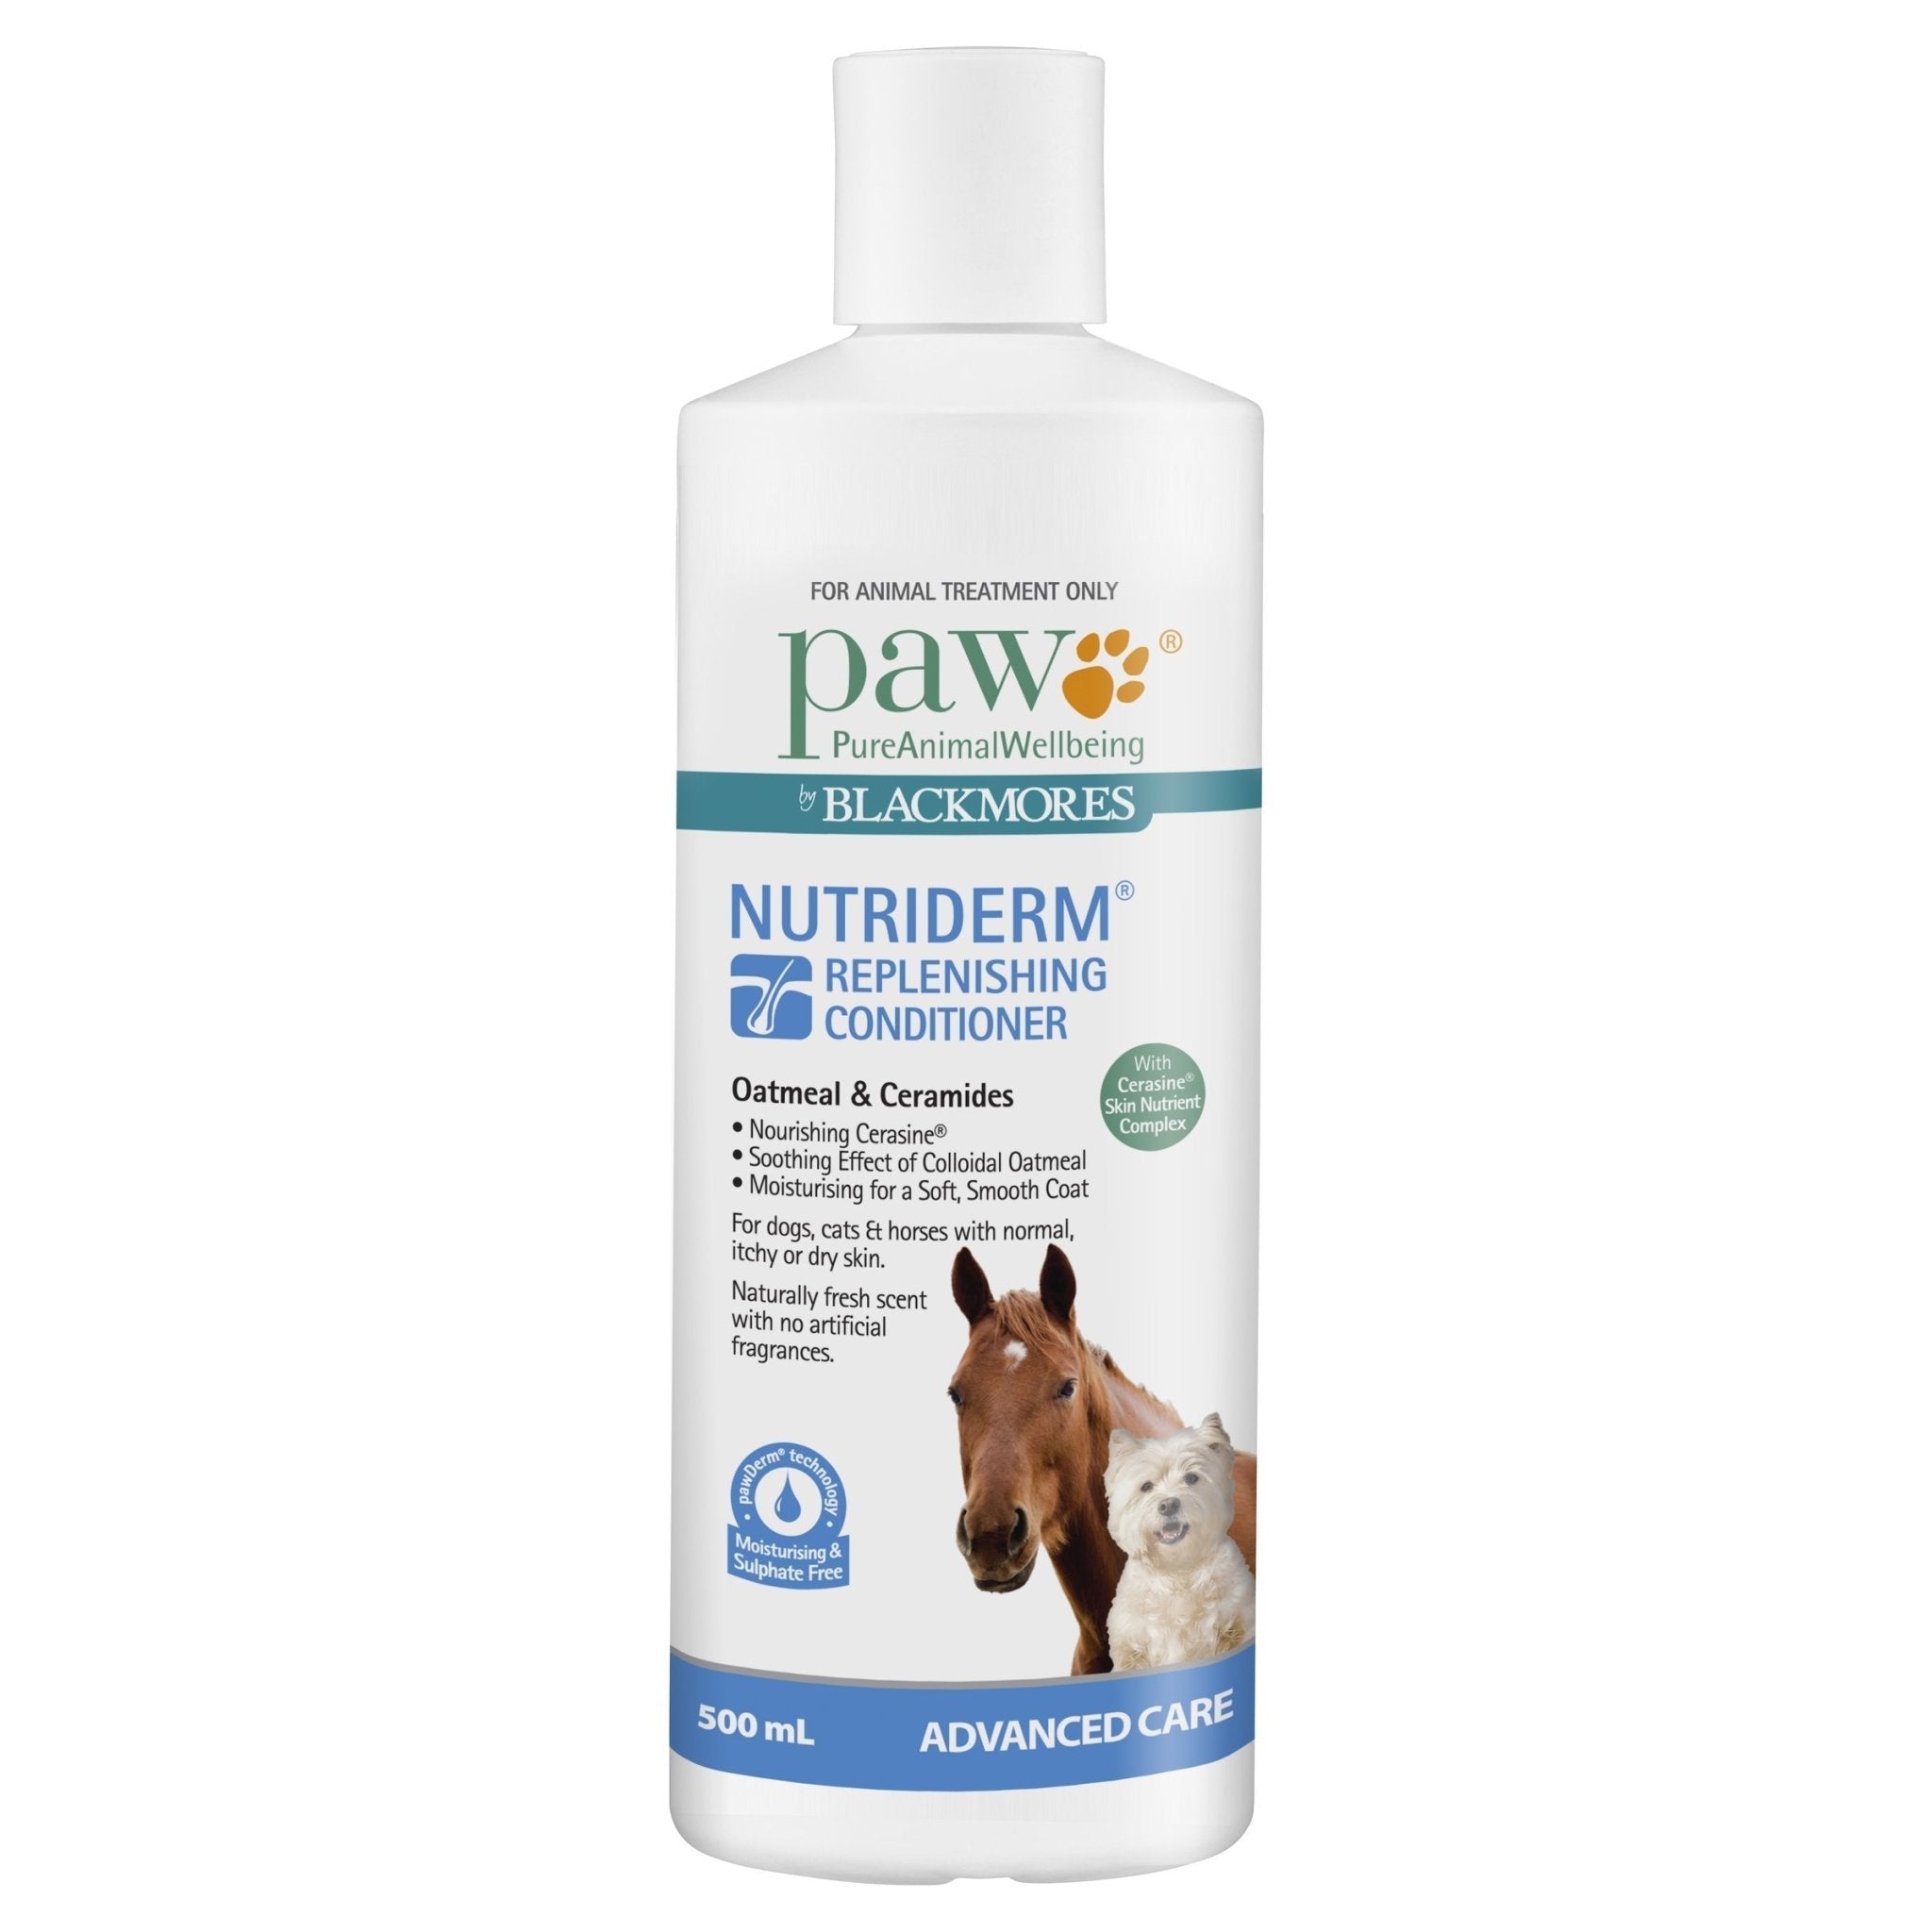 PAW Nutriderm® Replenishing Conditioner